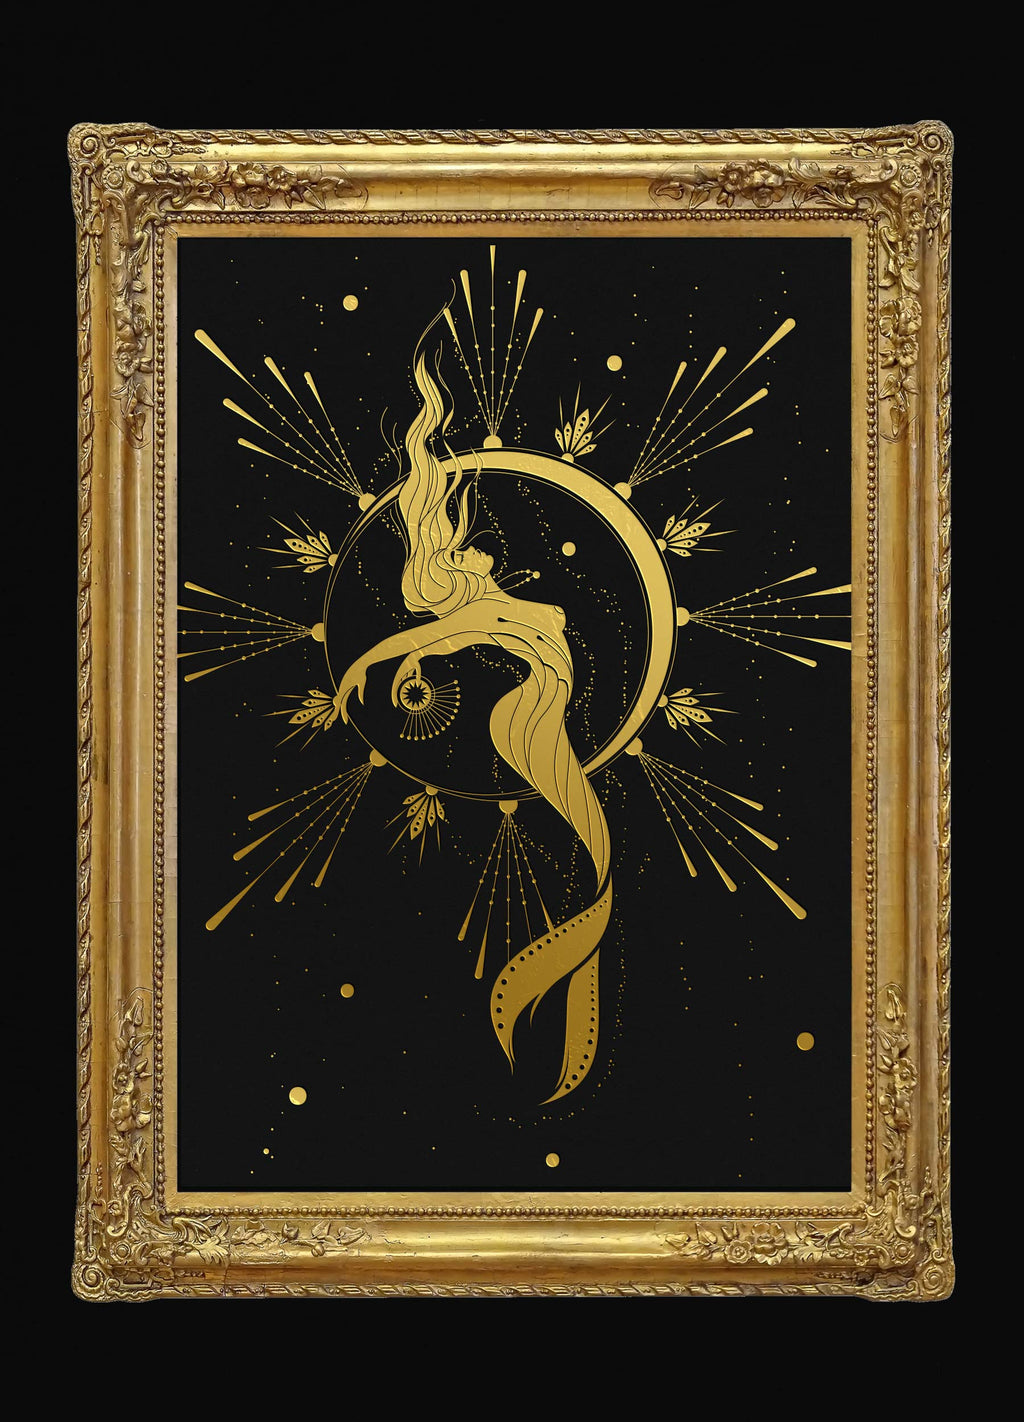 Mermaid under the Moonlight gold foil print on black paper by Cocorrina & Co Design studio